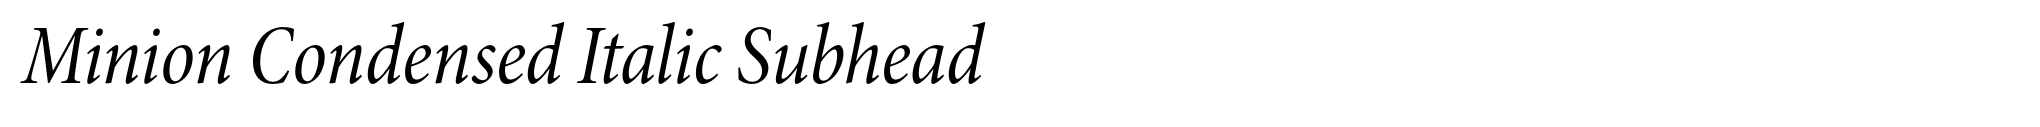 Minion Condensed Italic Subhead image